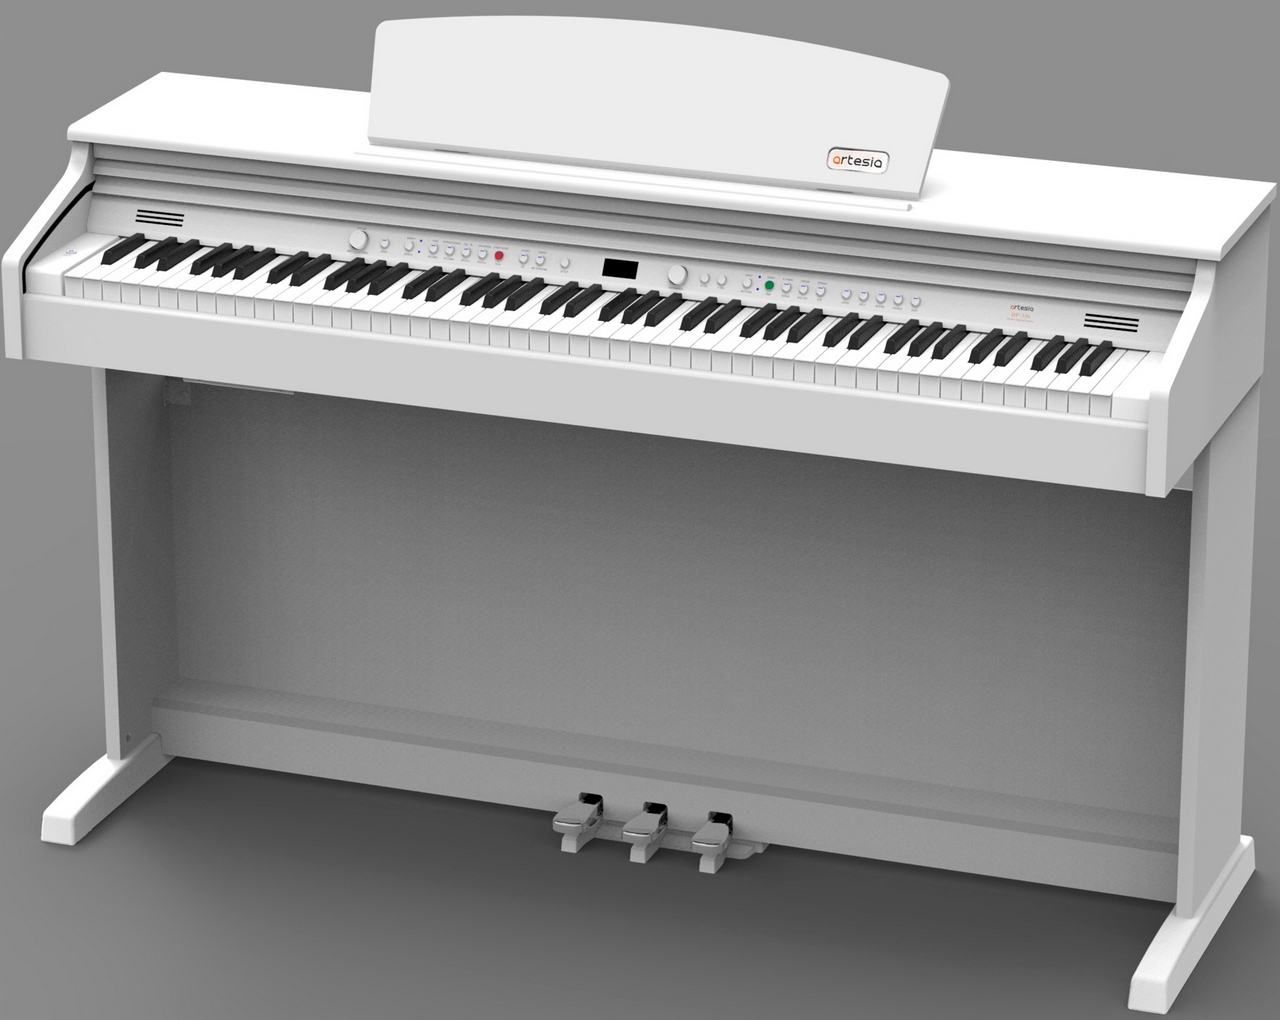 Artesia DP-10e White Цифровое фортепиано, белое